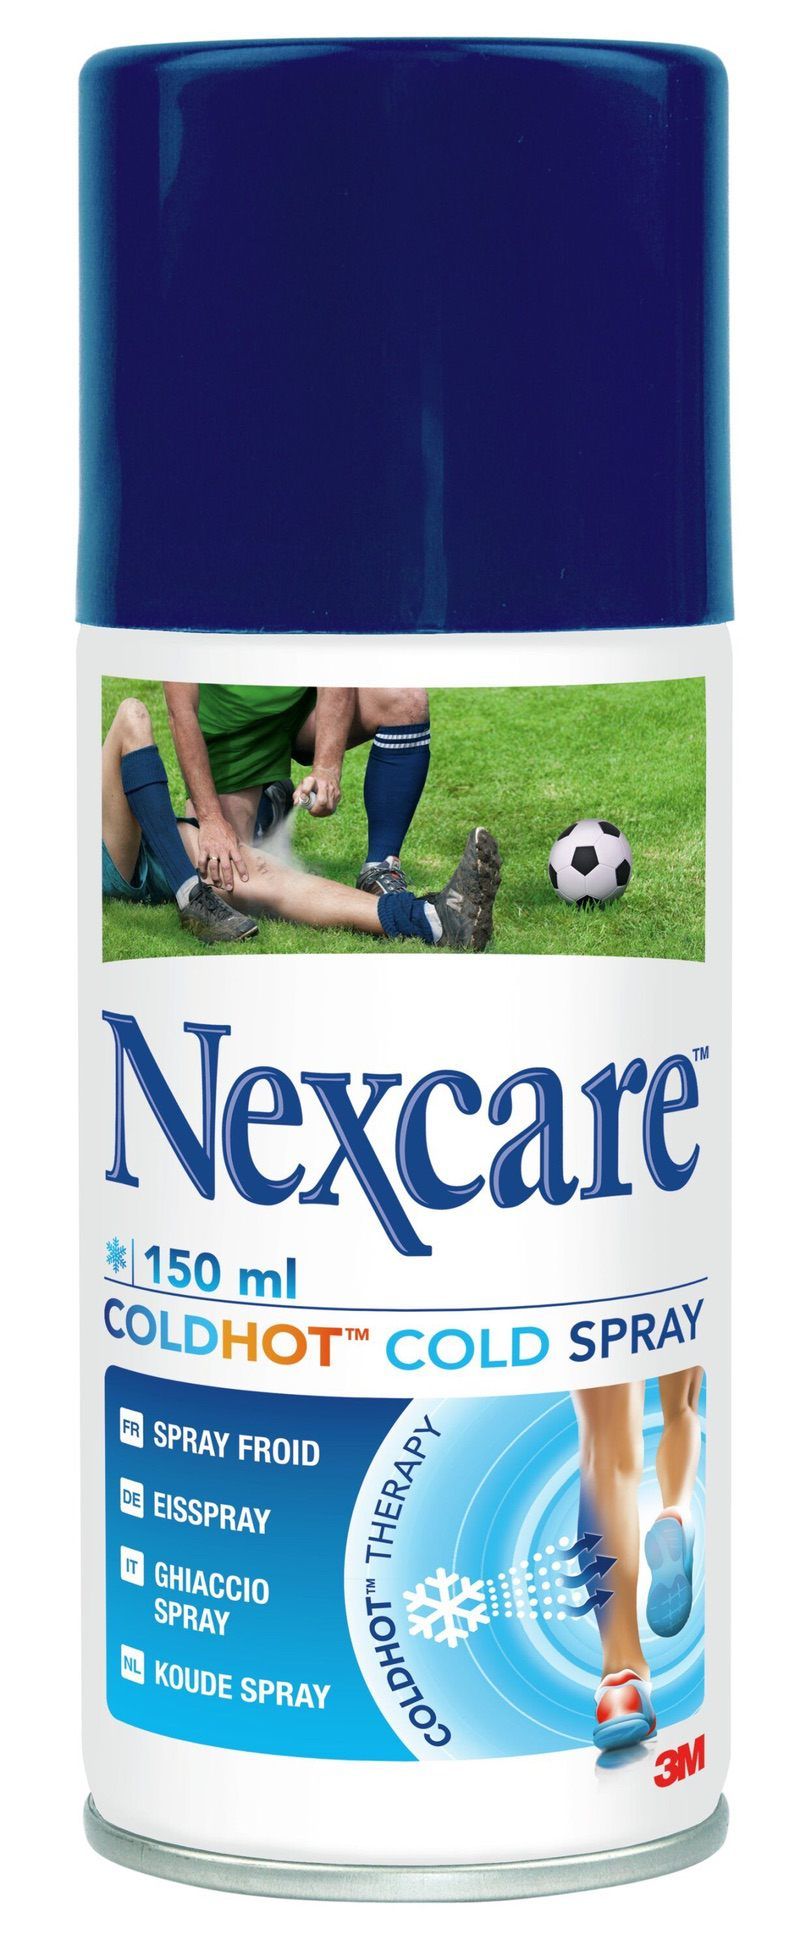 Nexcare™ ColdHot Cold Spray